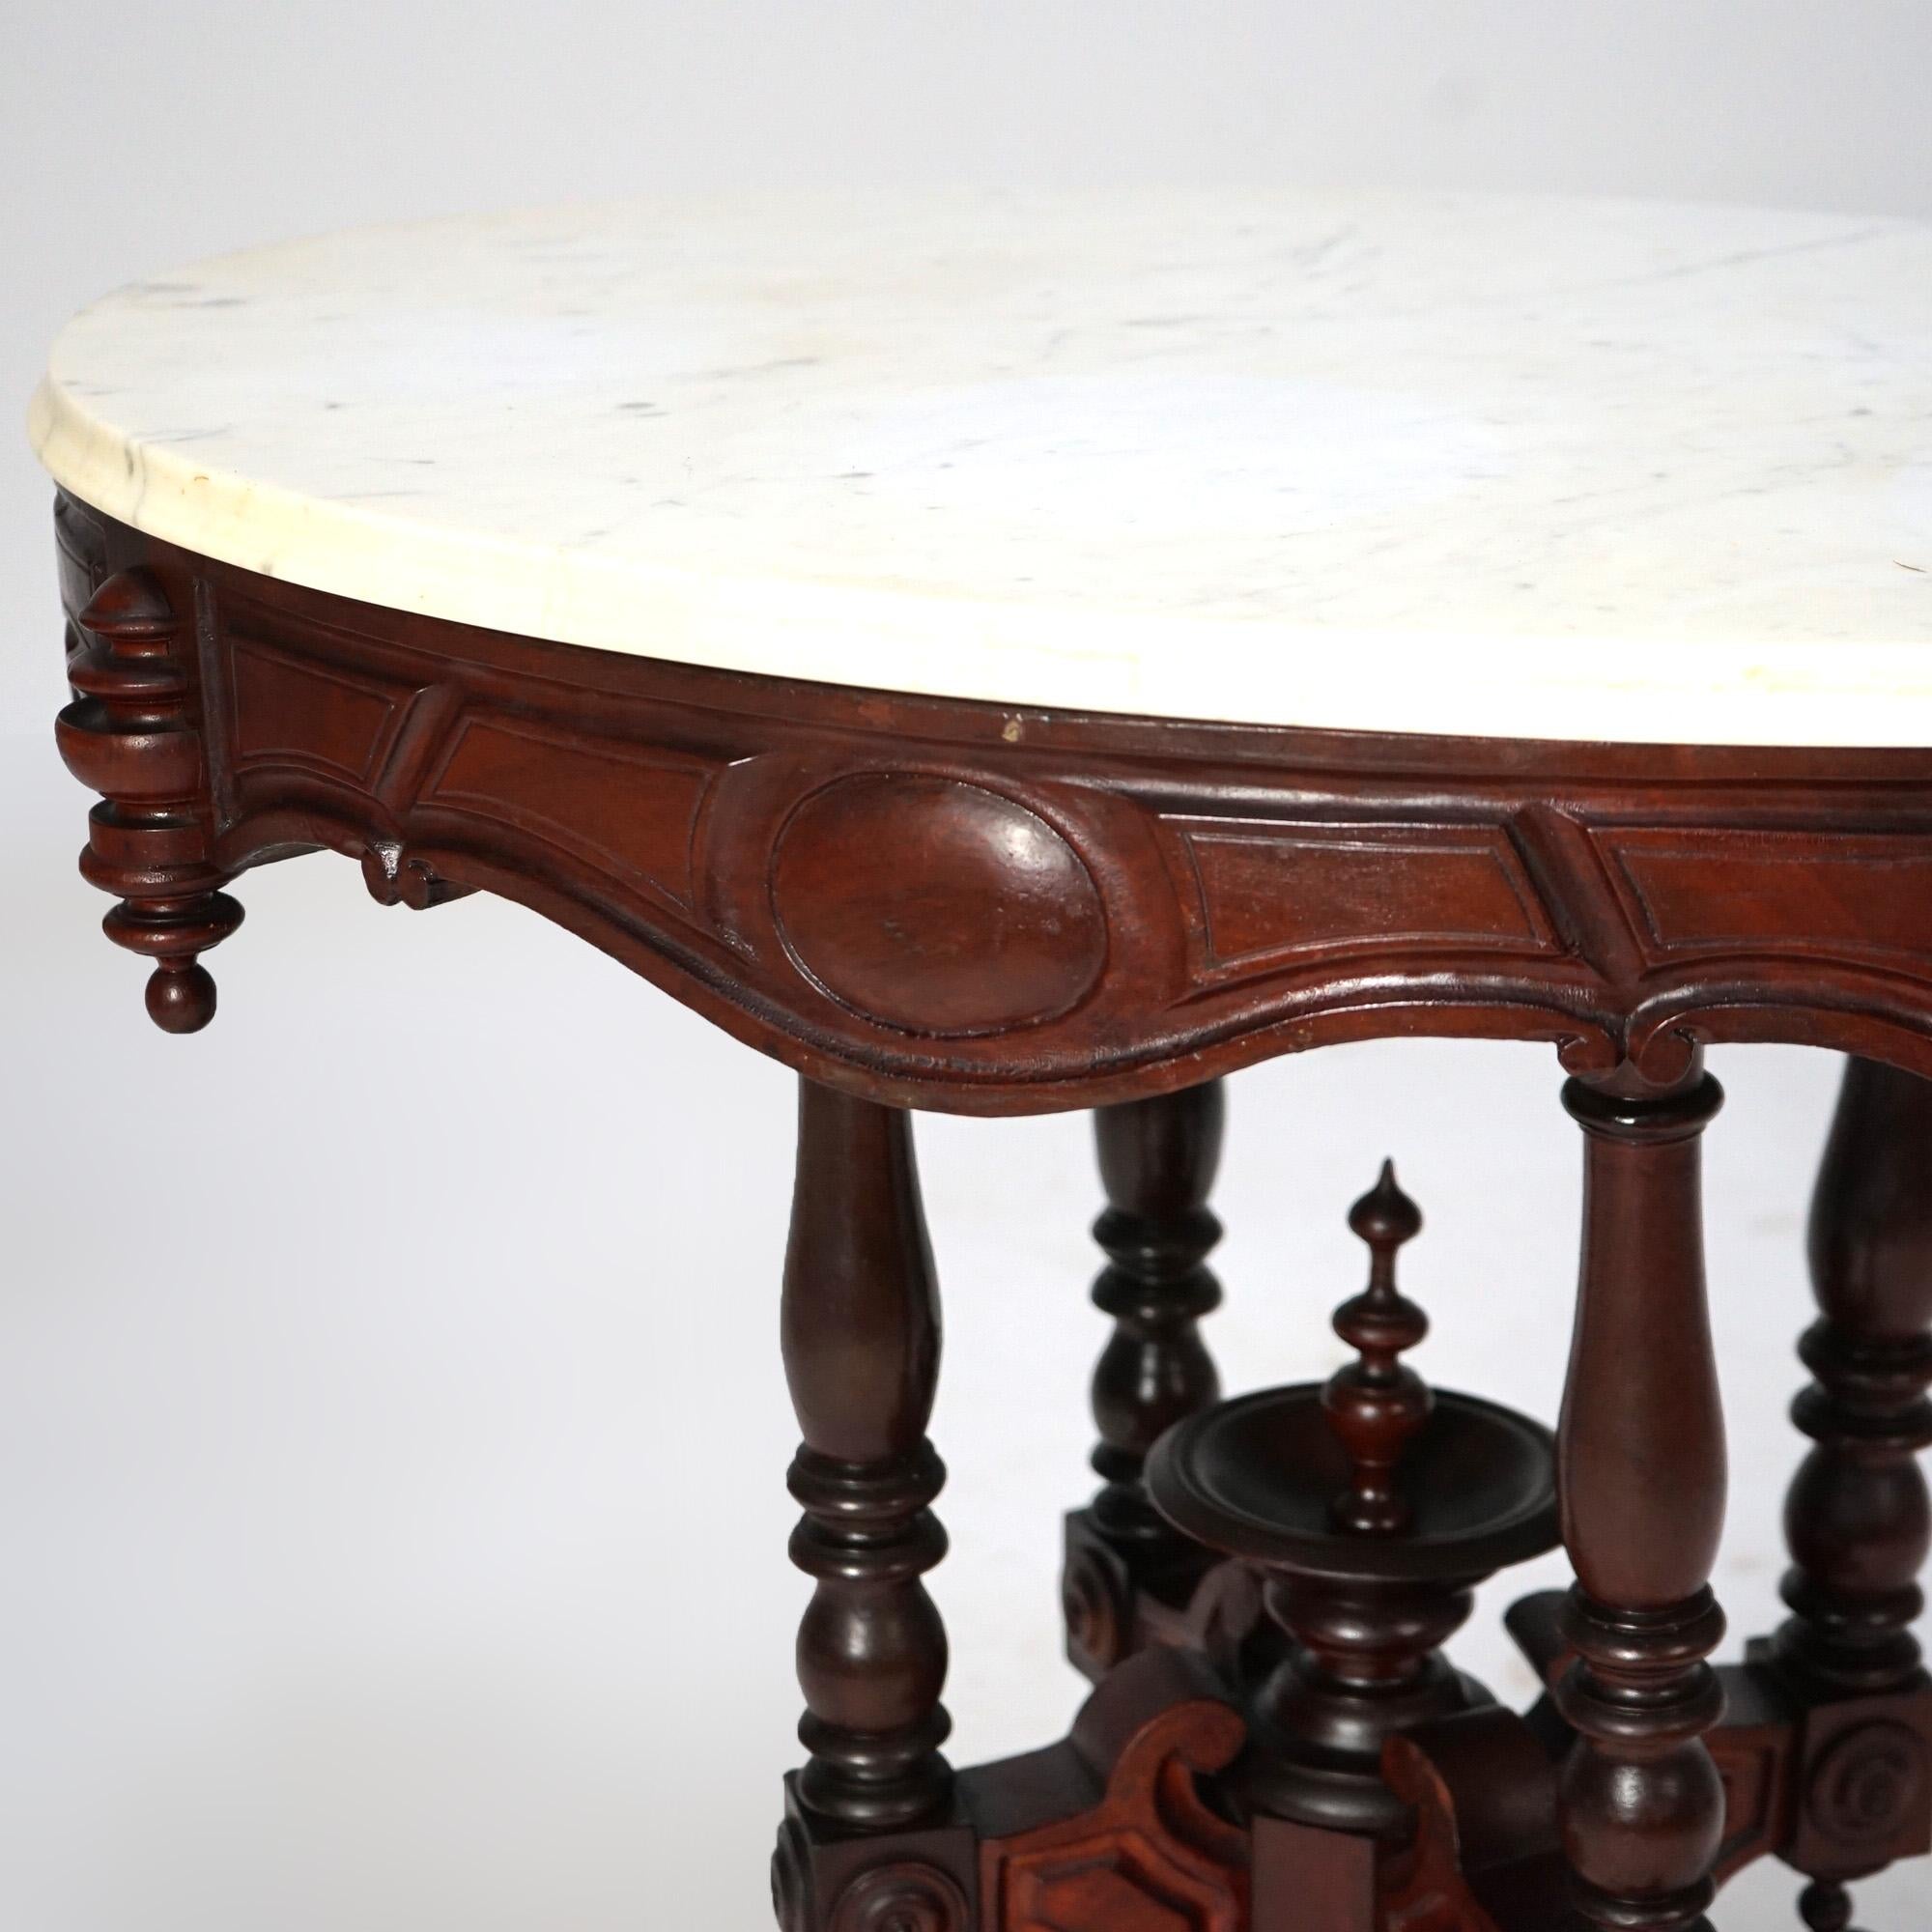 Antique Renaissance Revival Brooks Walnut Oval Marble Top Parlor Table c1890 For Sale 1